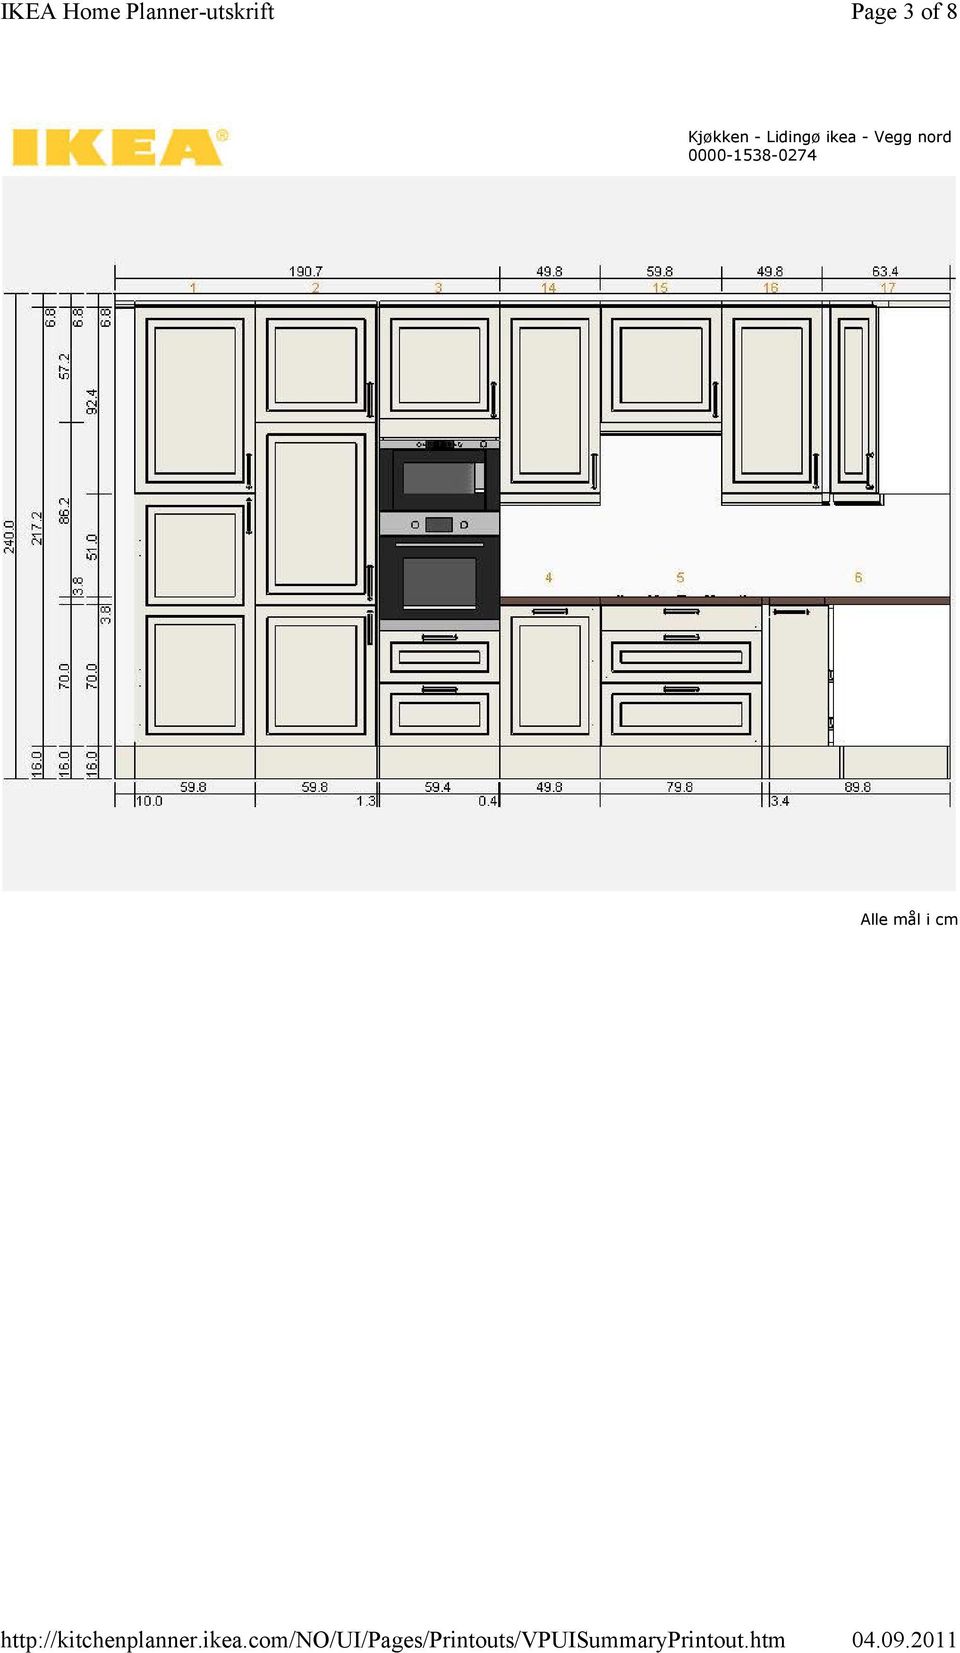 IKEA Home Planner-utskrift - PDF Free Download